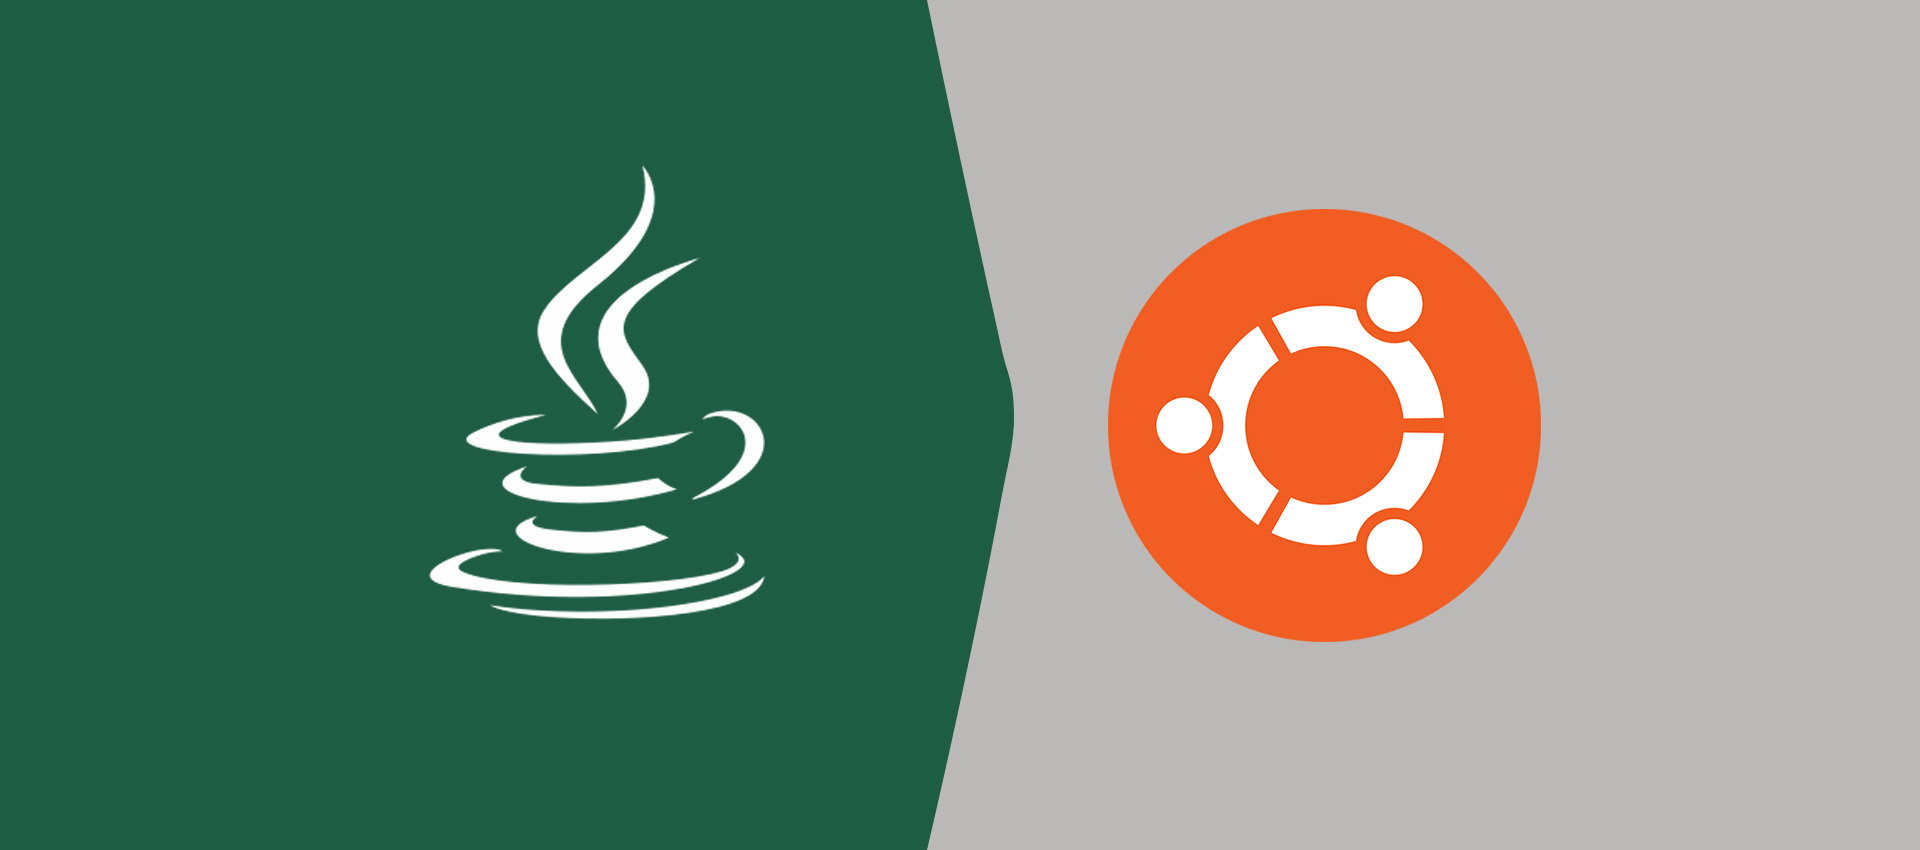 How To Install Java 8 On Ubuntu